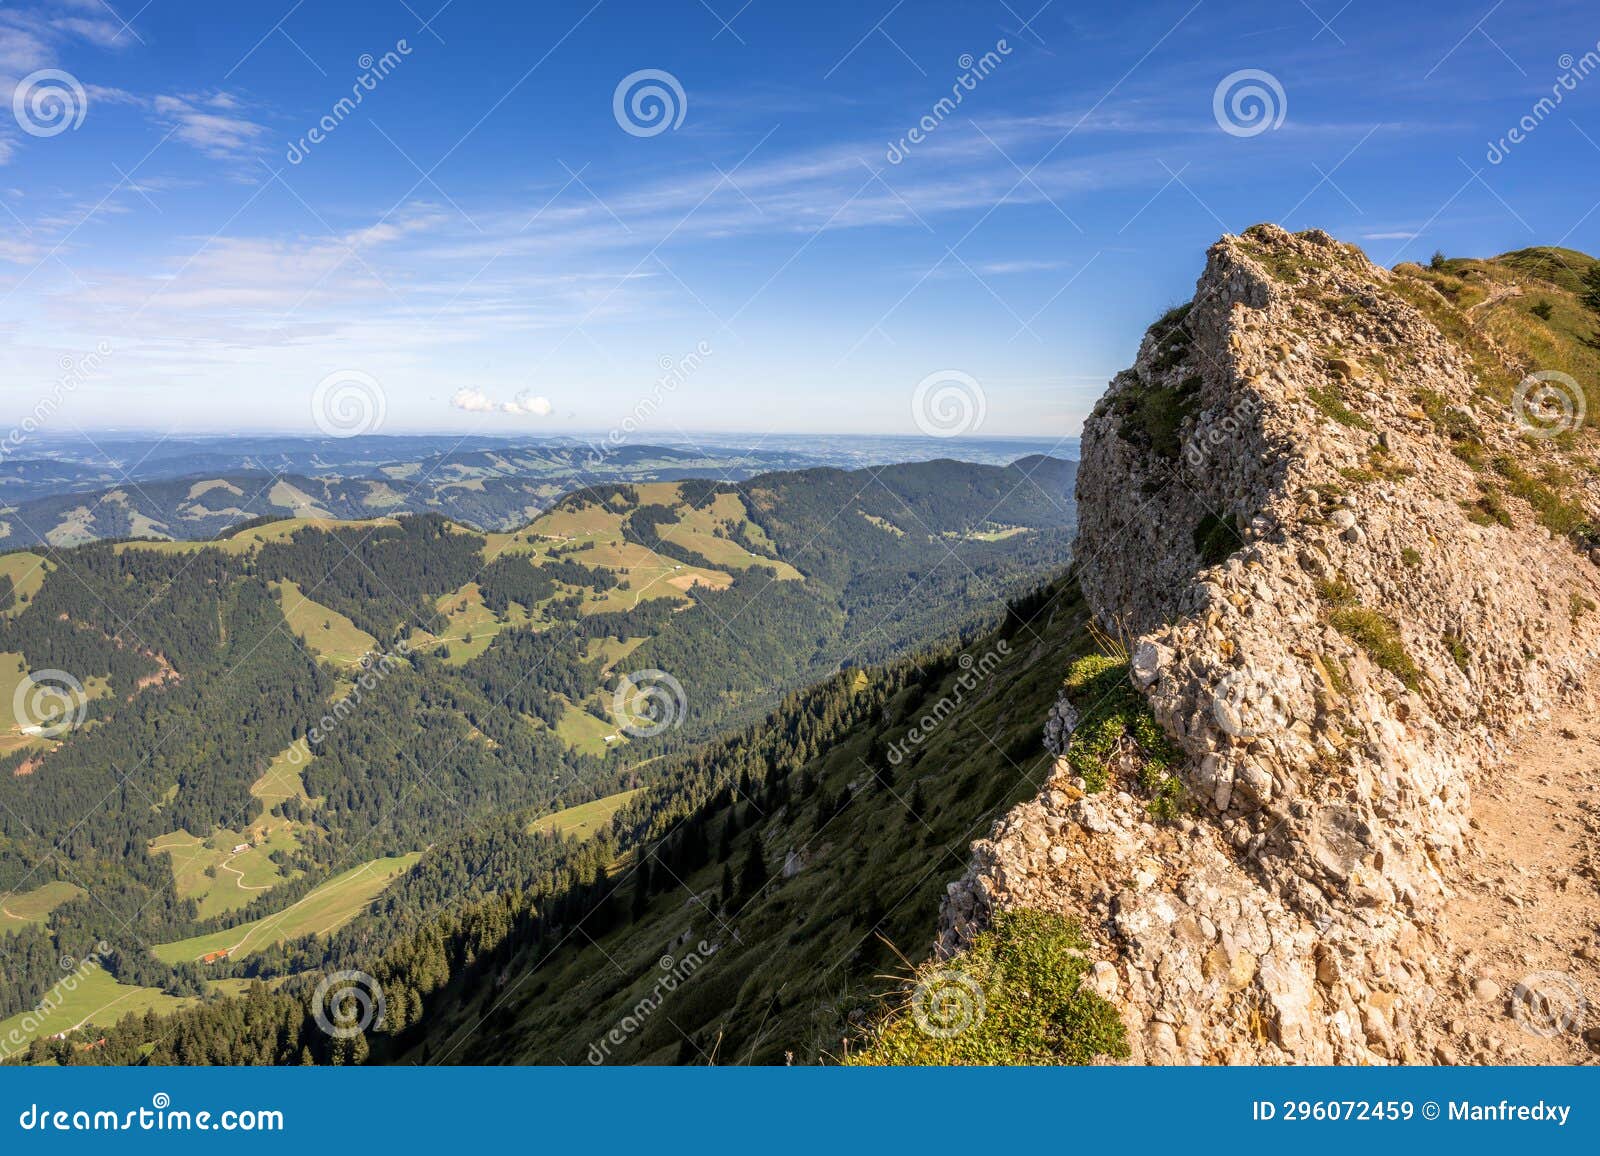 view from the hochgrat mountain near oberstaufen